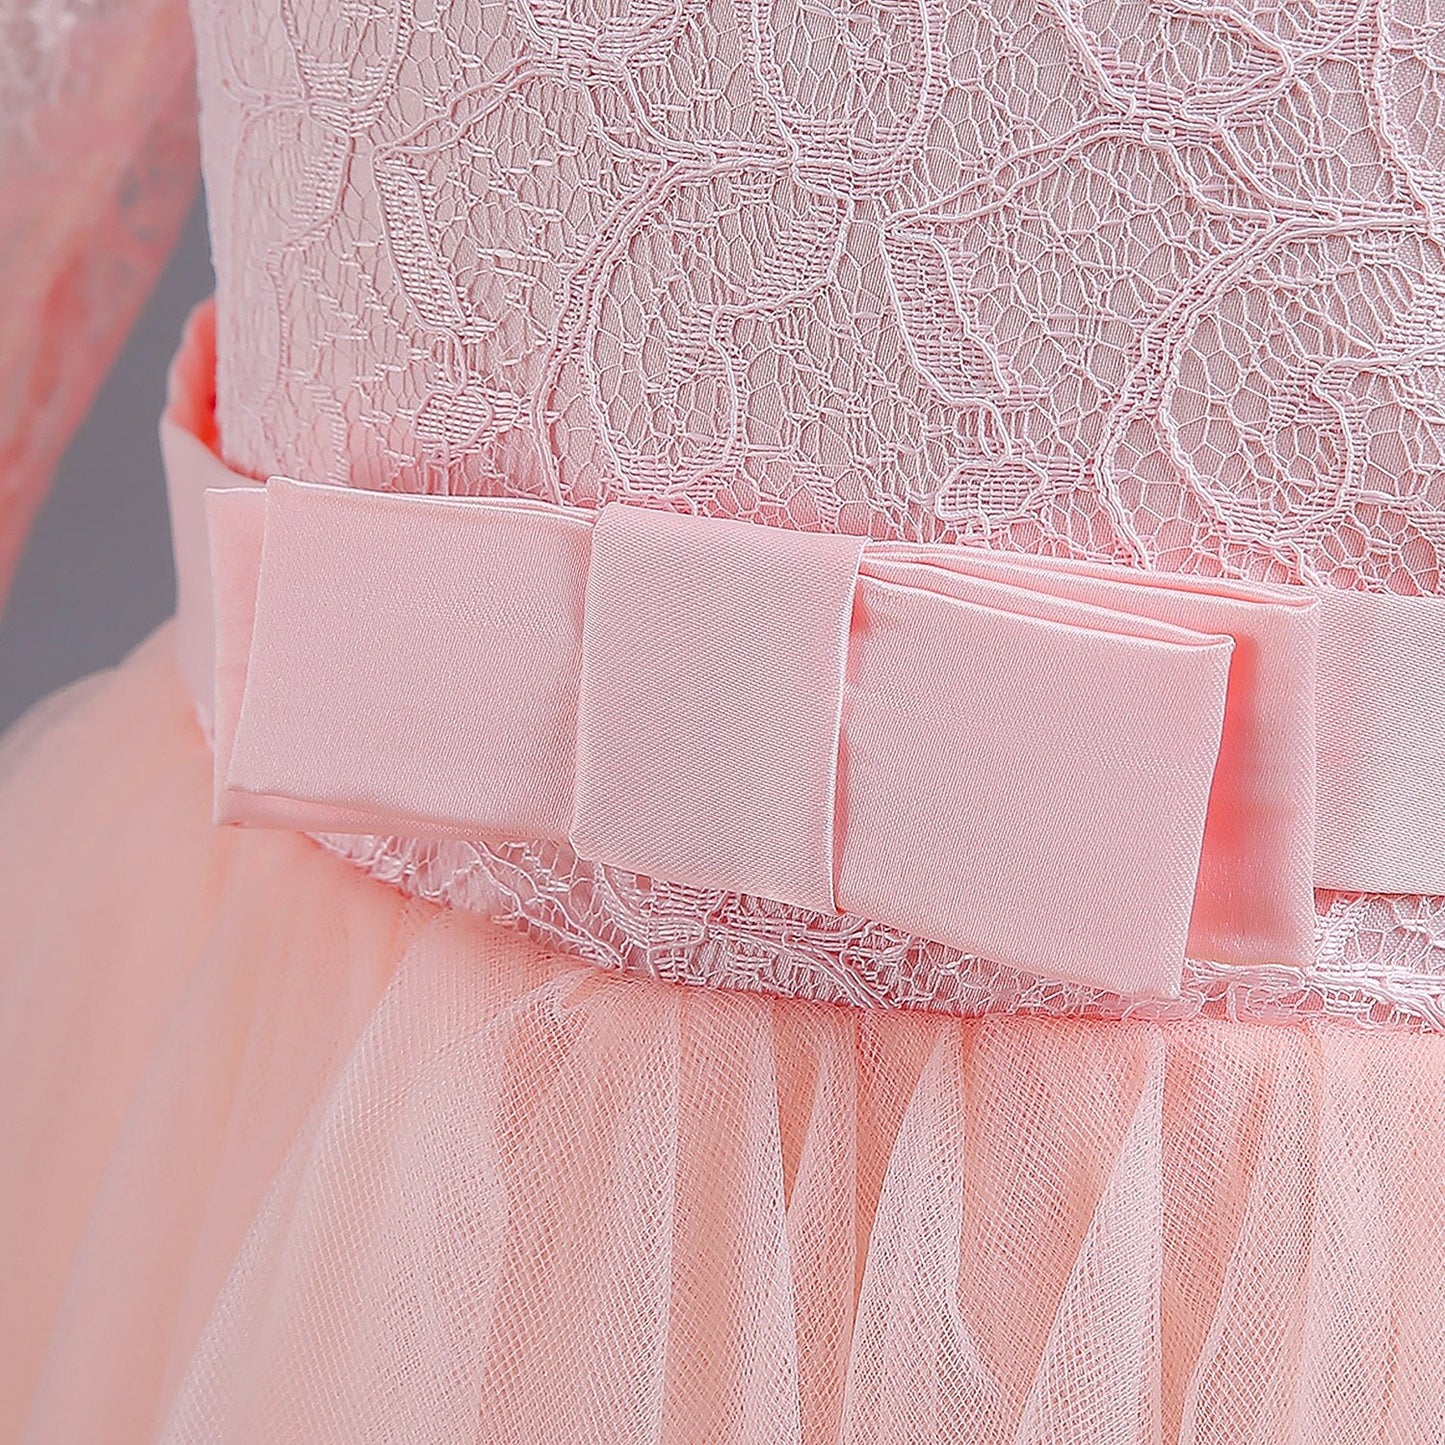 Elegant Pink Lace Flower Princess Dress for Girls: Perfect for Eid Celebrations